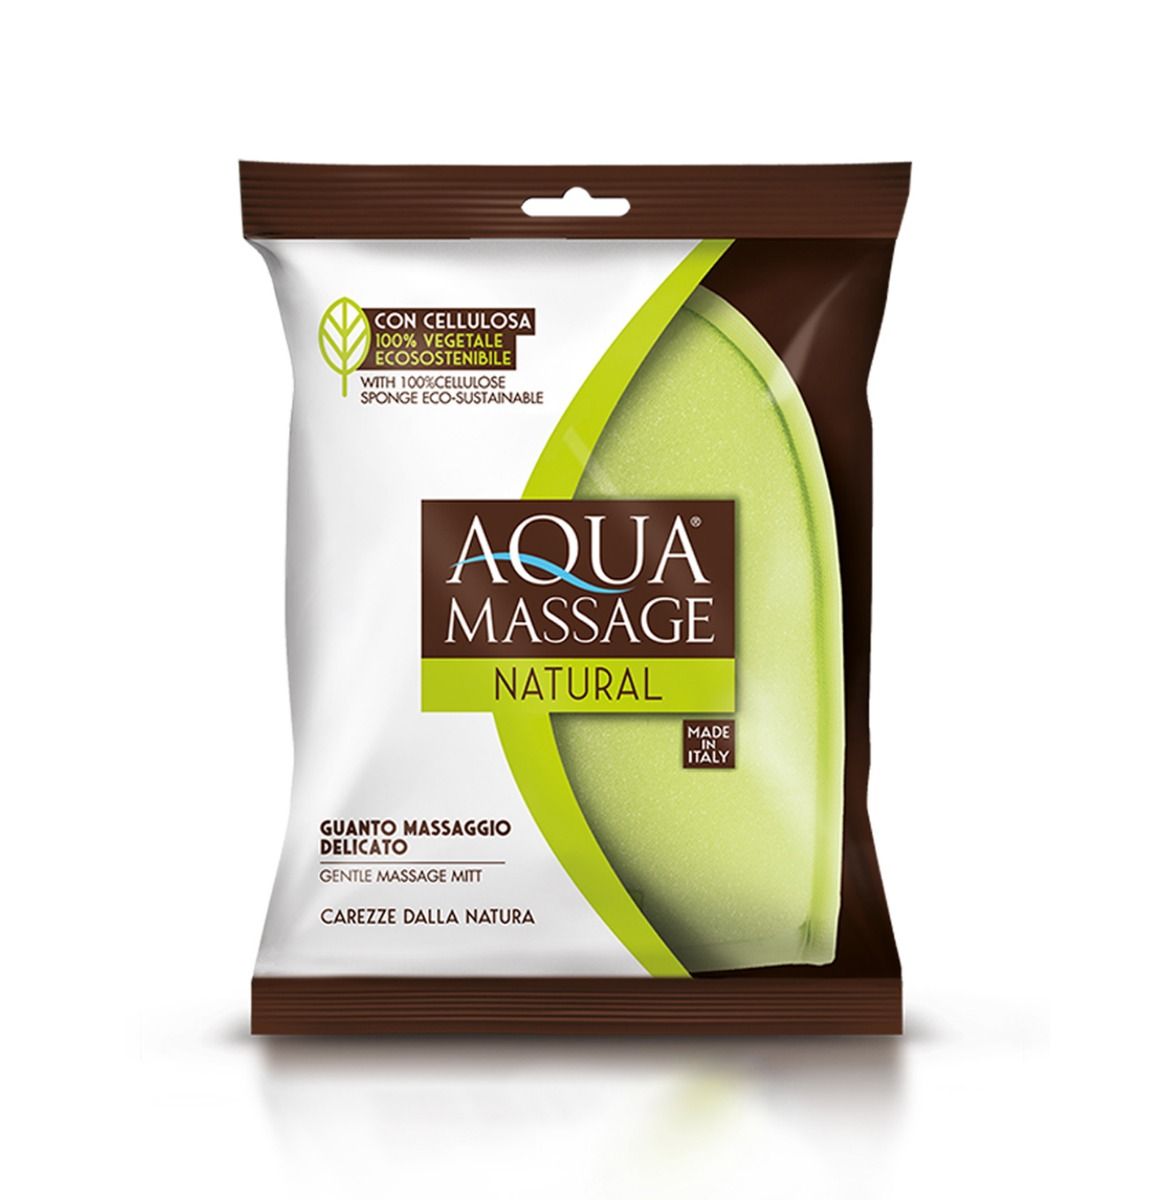 Aqua Massage - Natural - Delicate Massage Glove